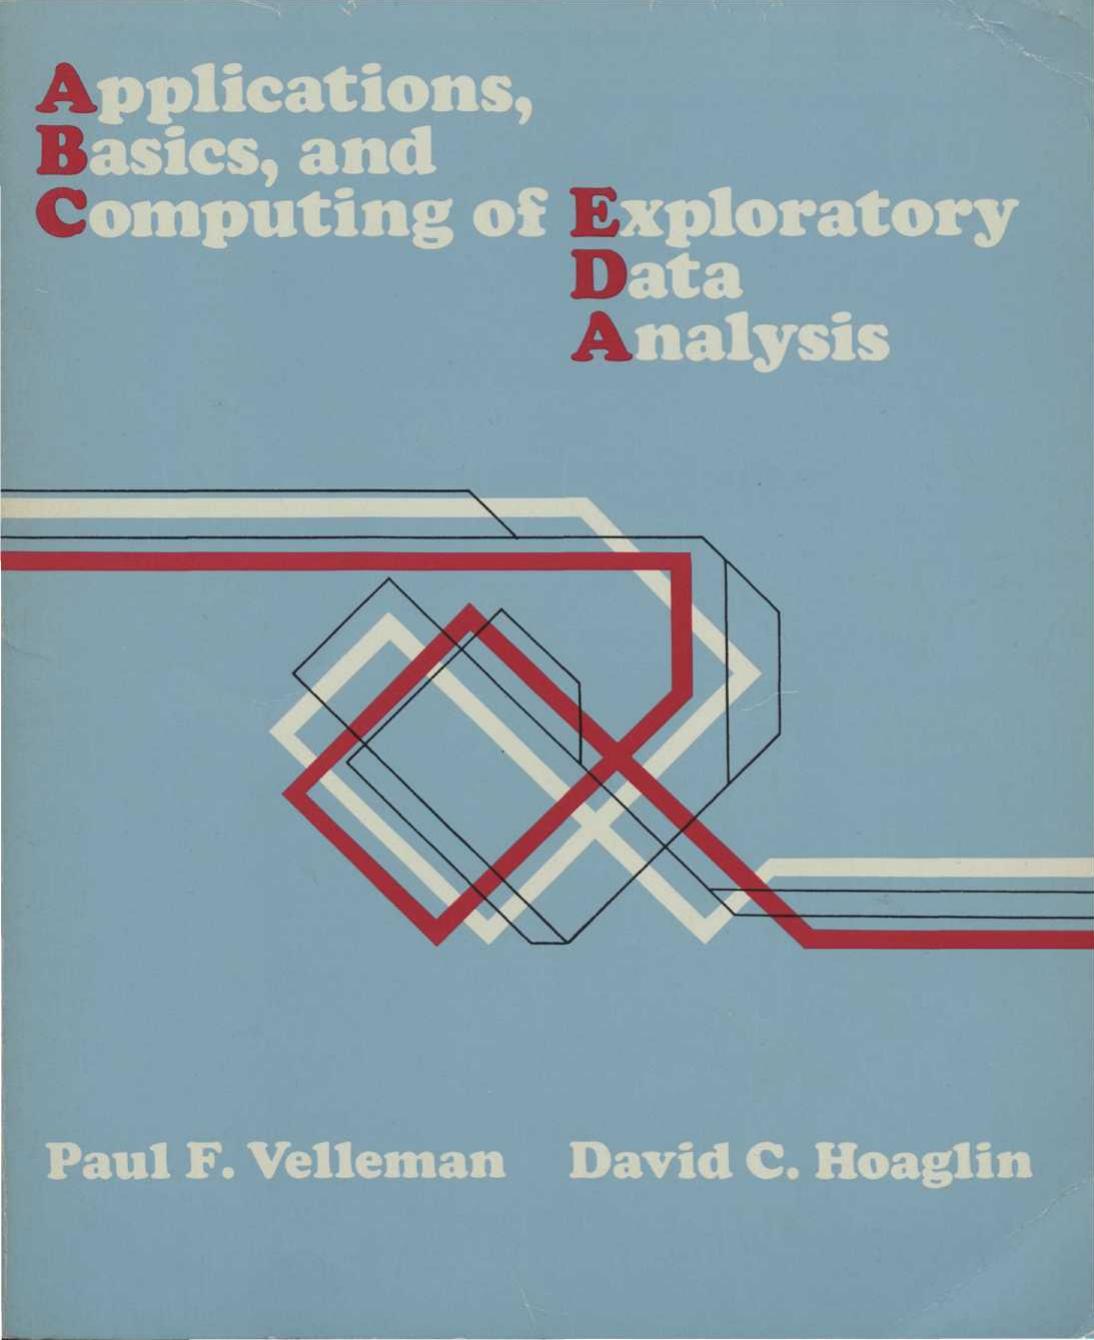 Applications, Basics, and Computing of Exploratory Data Analysis